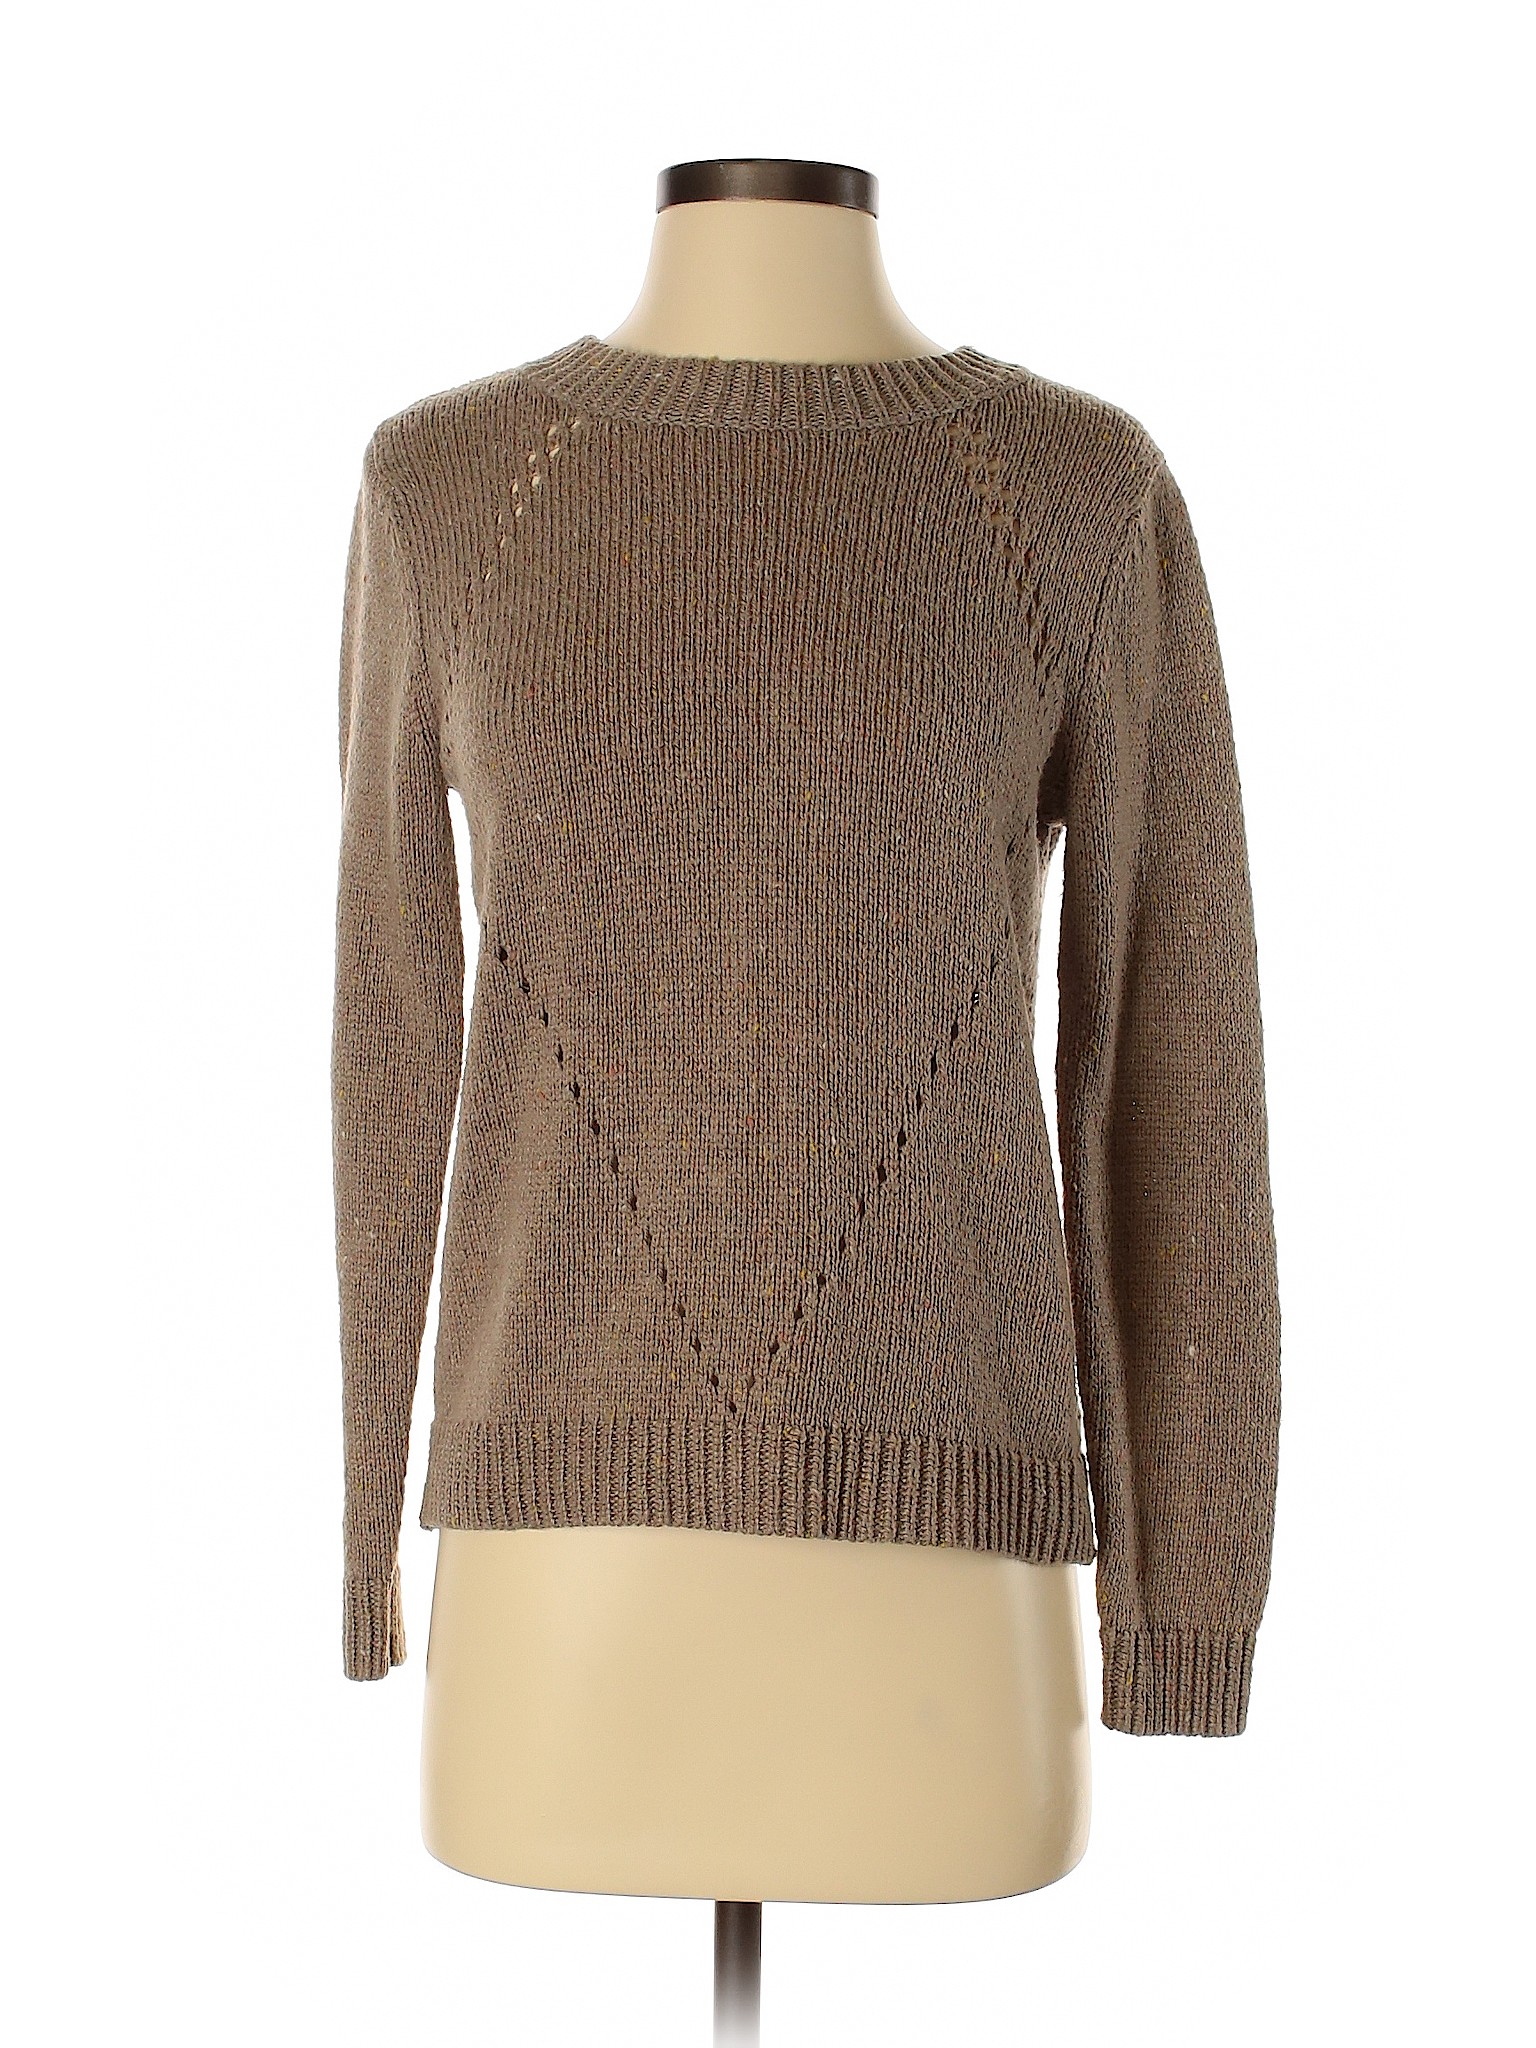 Love 21 Women Brown Pullover Sweater S | eBay